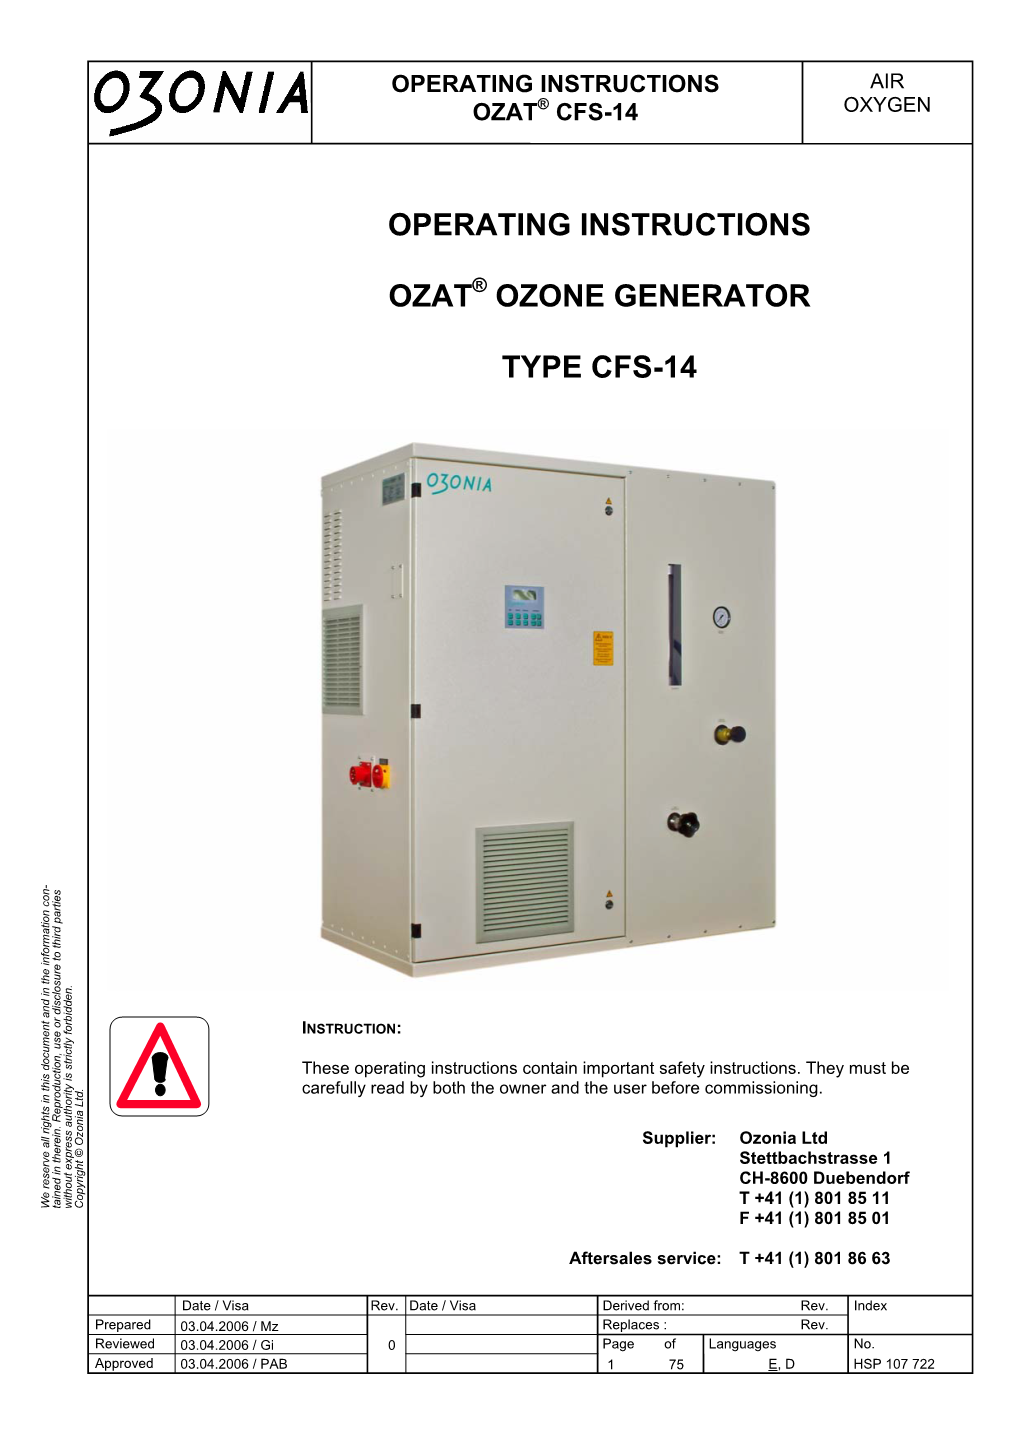 Operating Instructions Ozat Ozone Generator Type Cfs-14